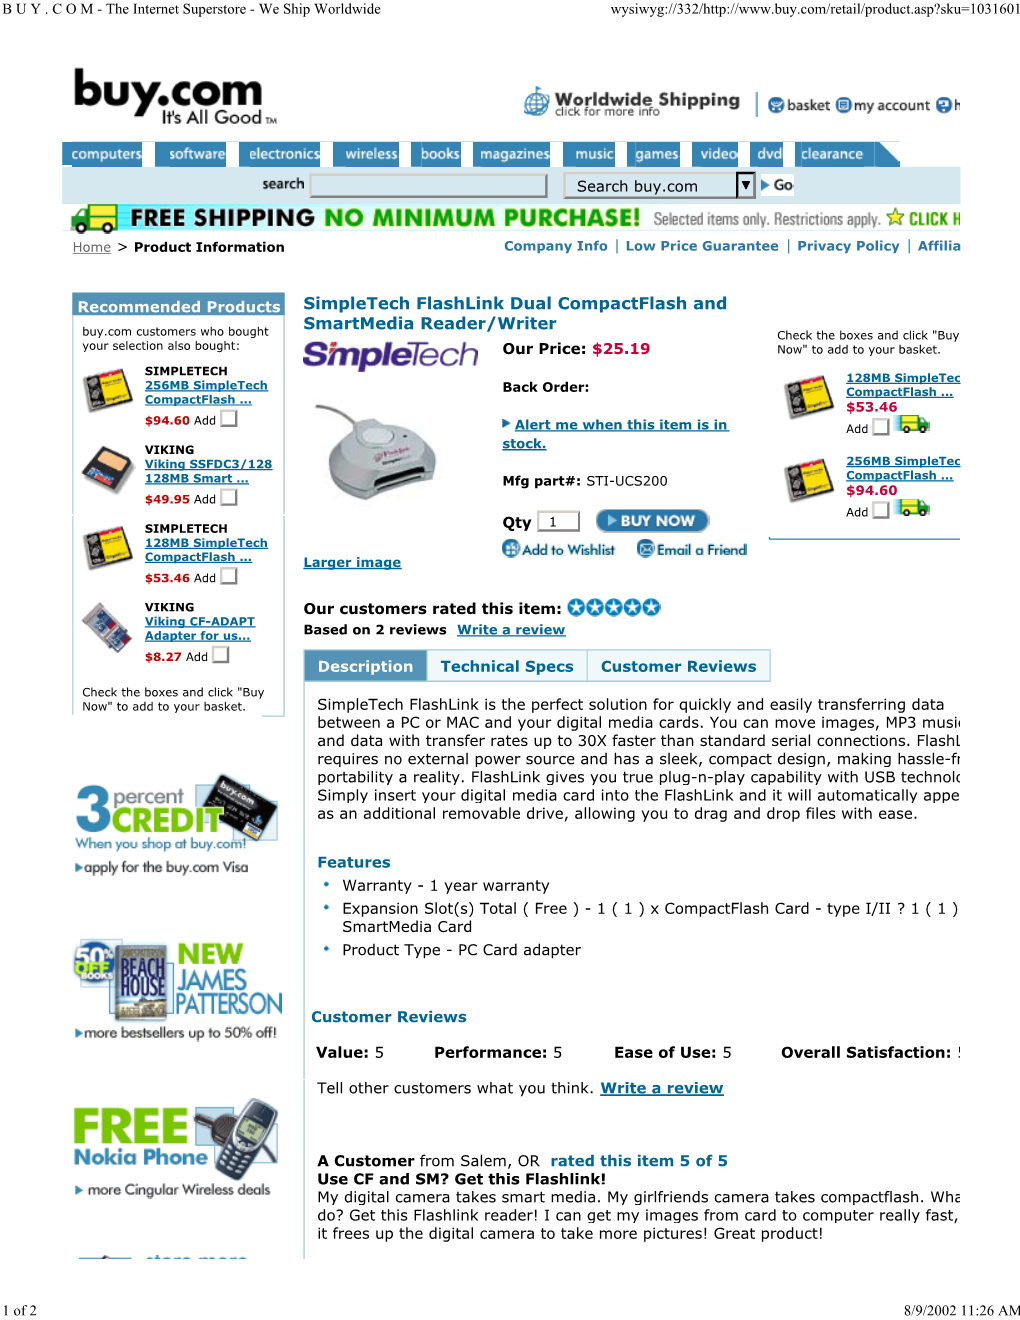 Simpletech Flashlink Dual Compactflash and Smartmedia